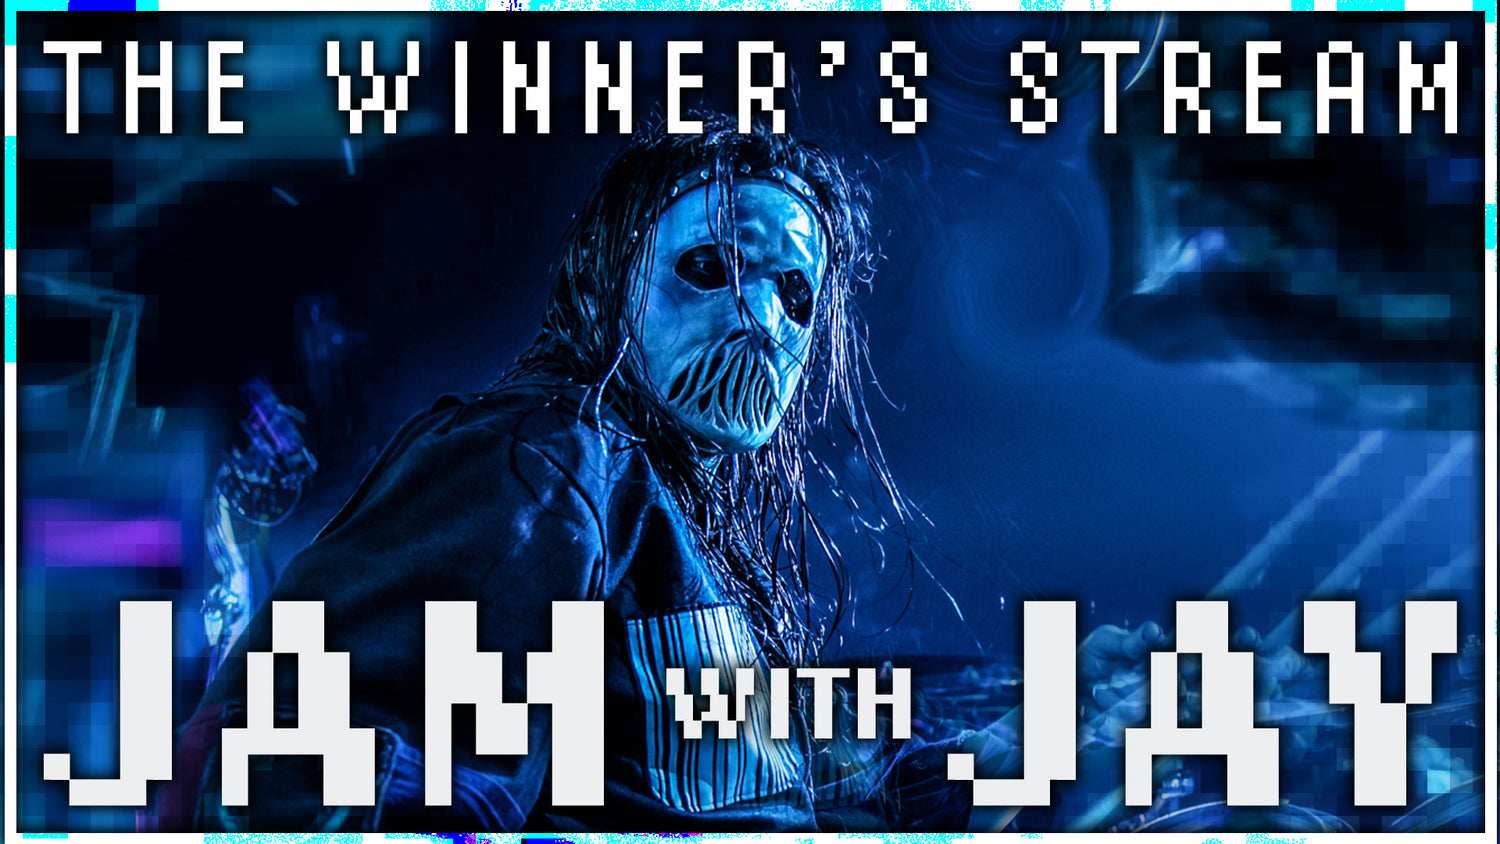 Jam With Jay - The Winner's Stream set for June 6th